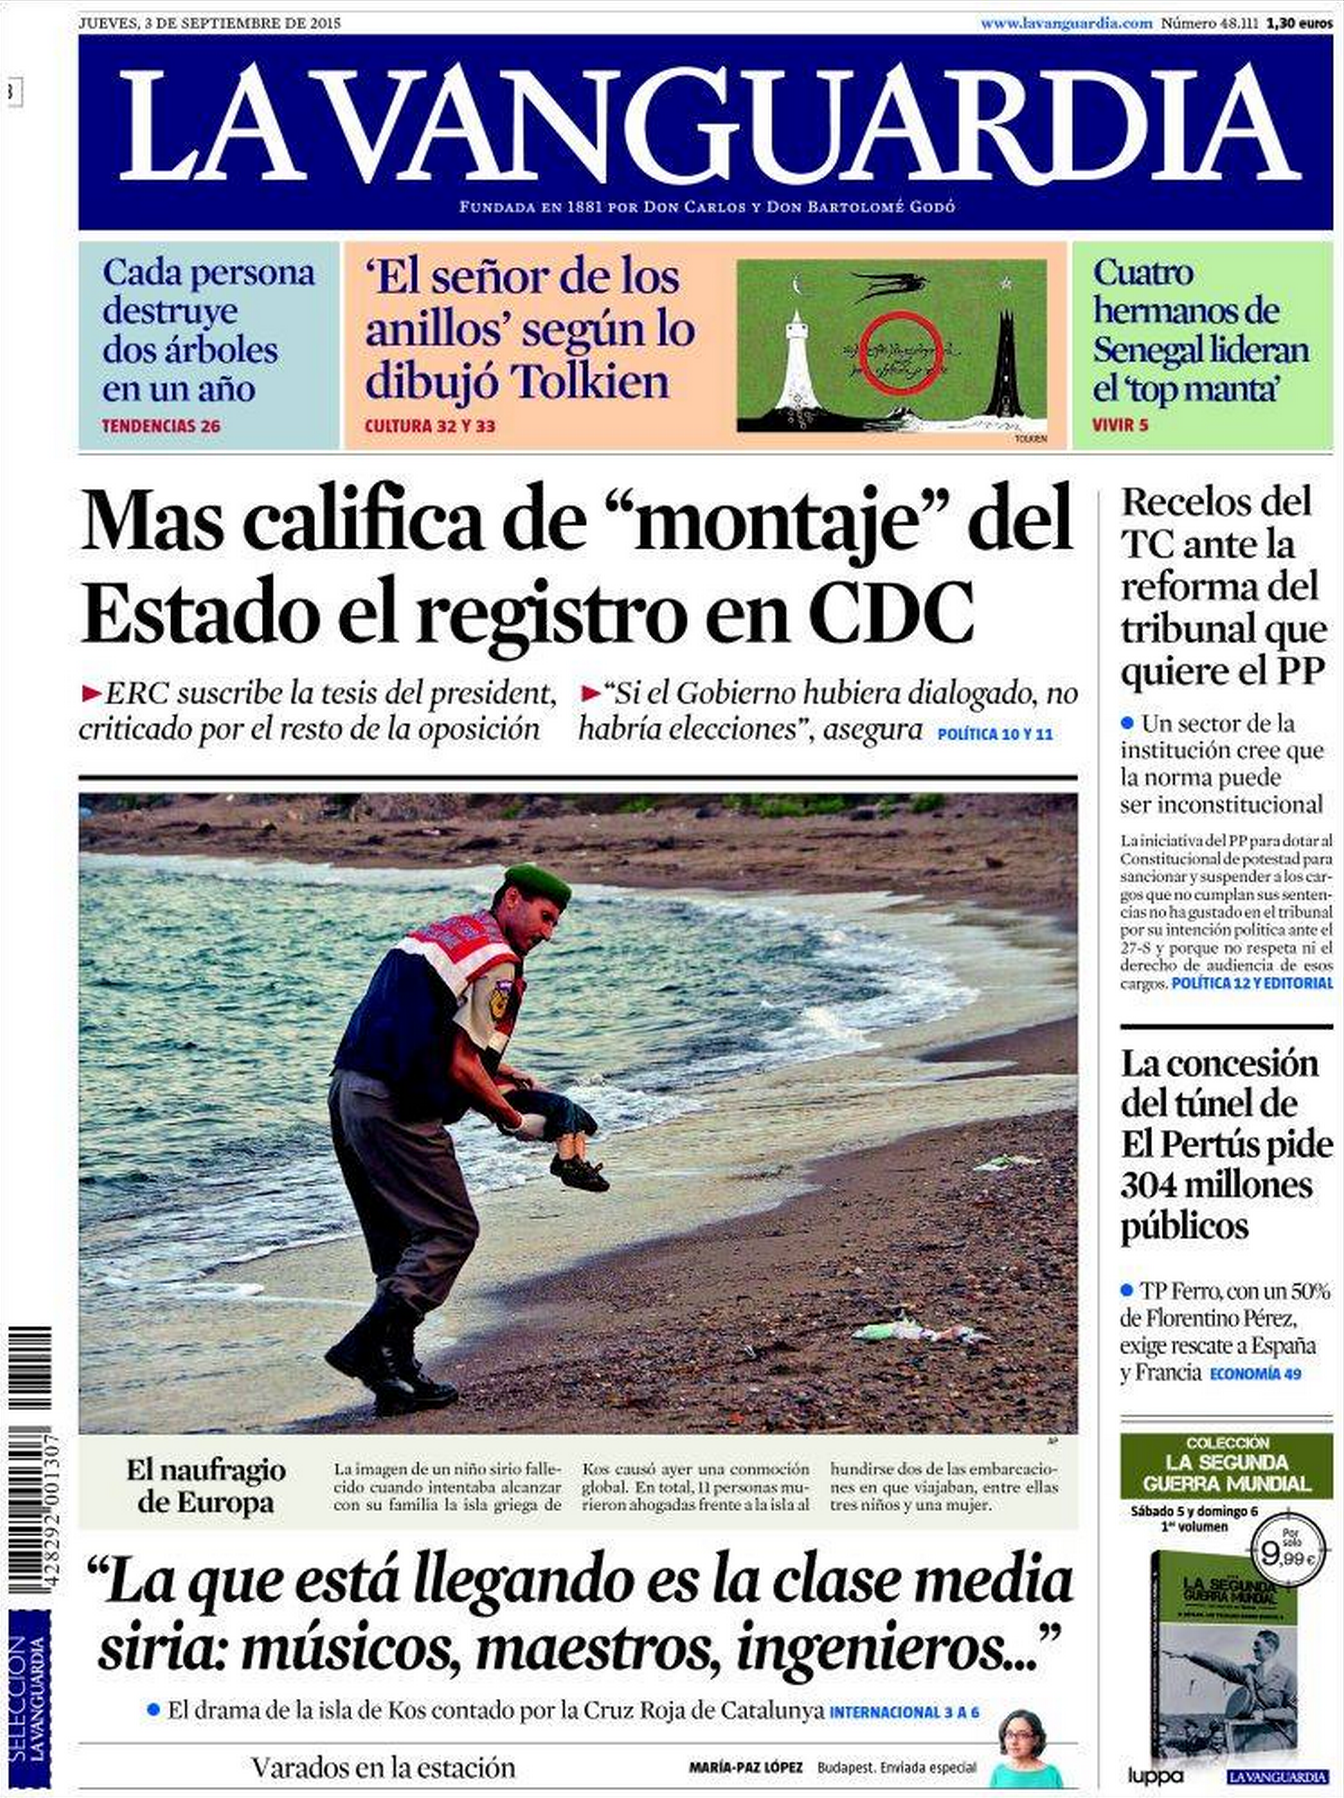 Drowned Migrant Boy La Vanguardia front page